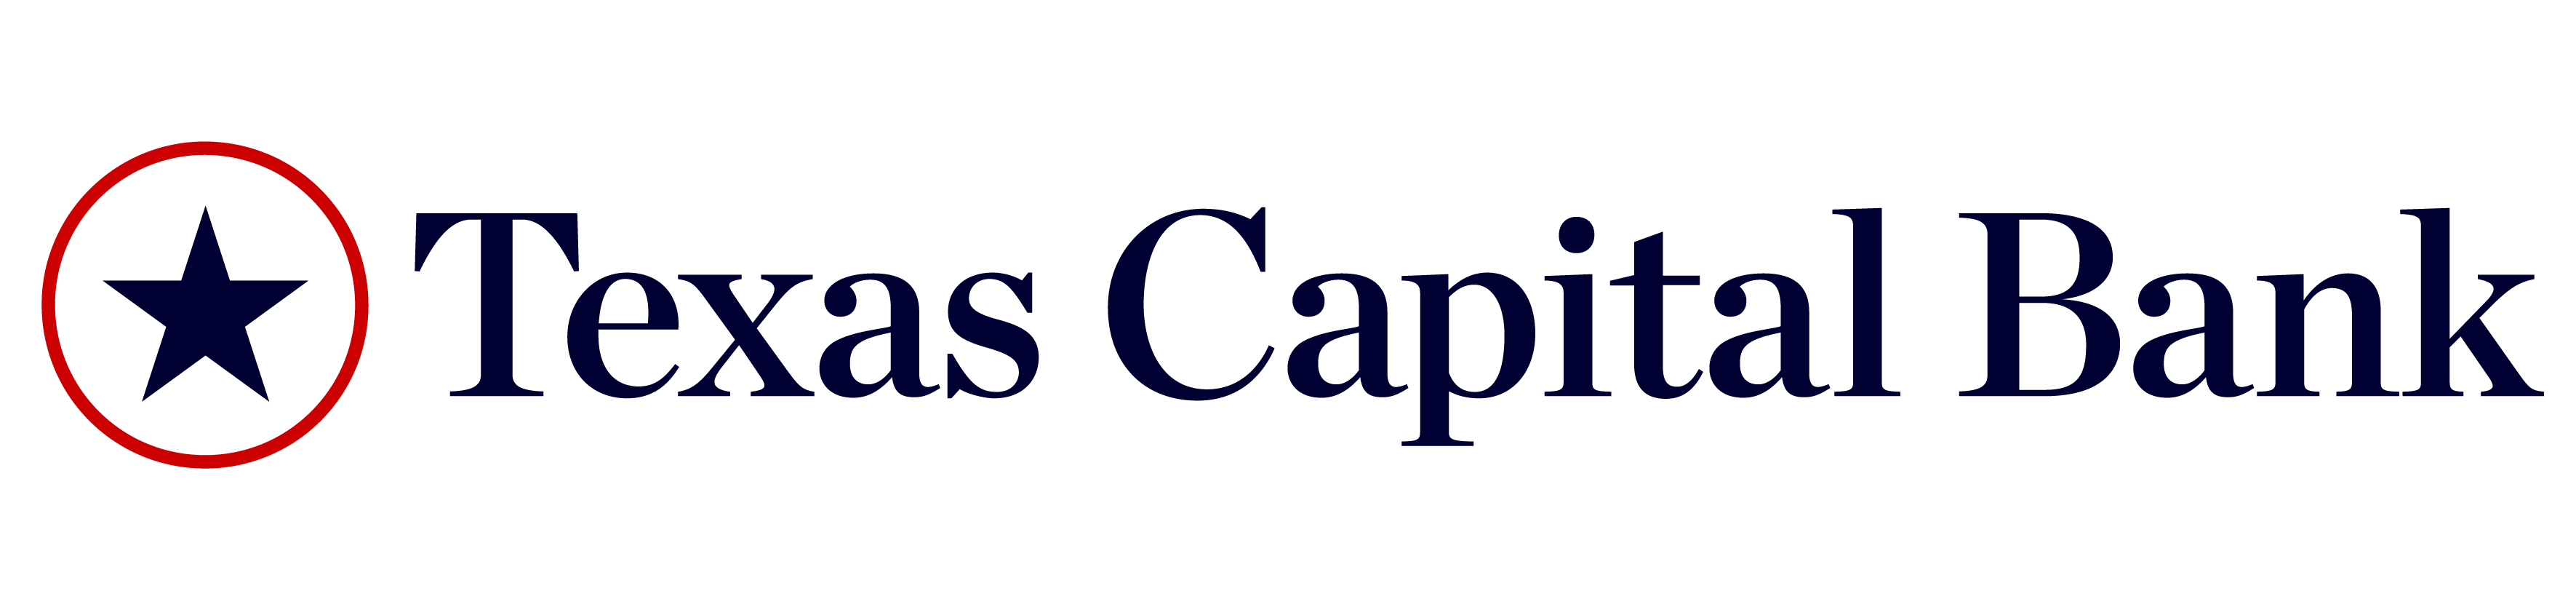 A. (Corporate Leadership Council) Texas Capital Bank